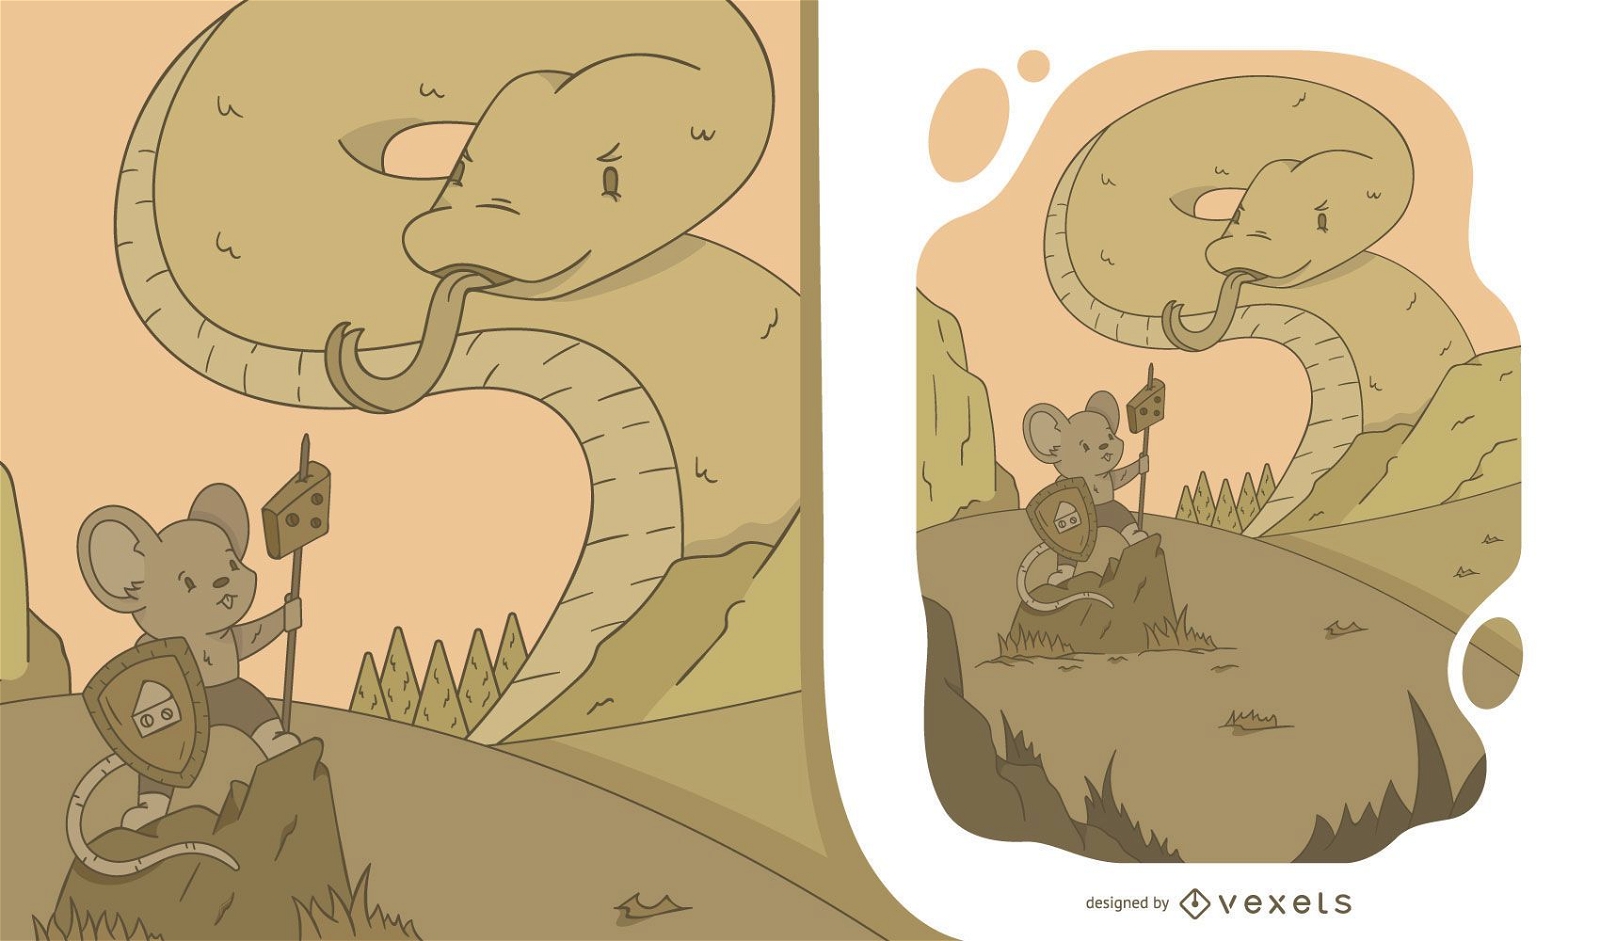 Mouse vs snake illustration